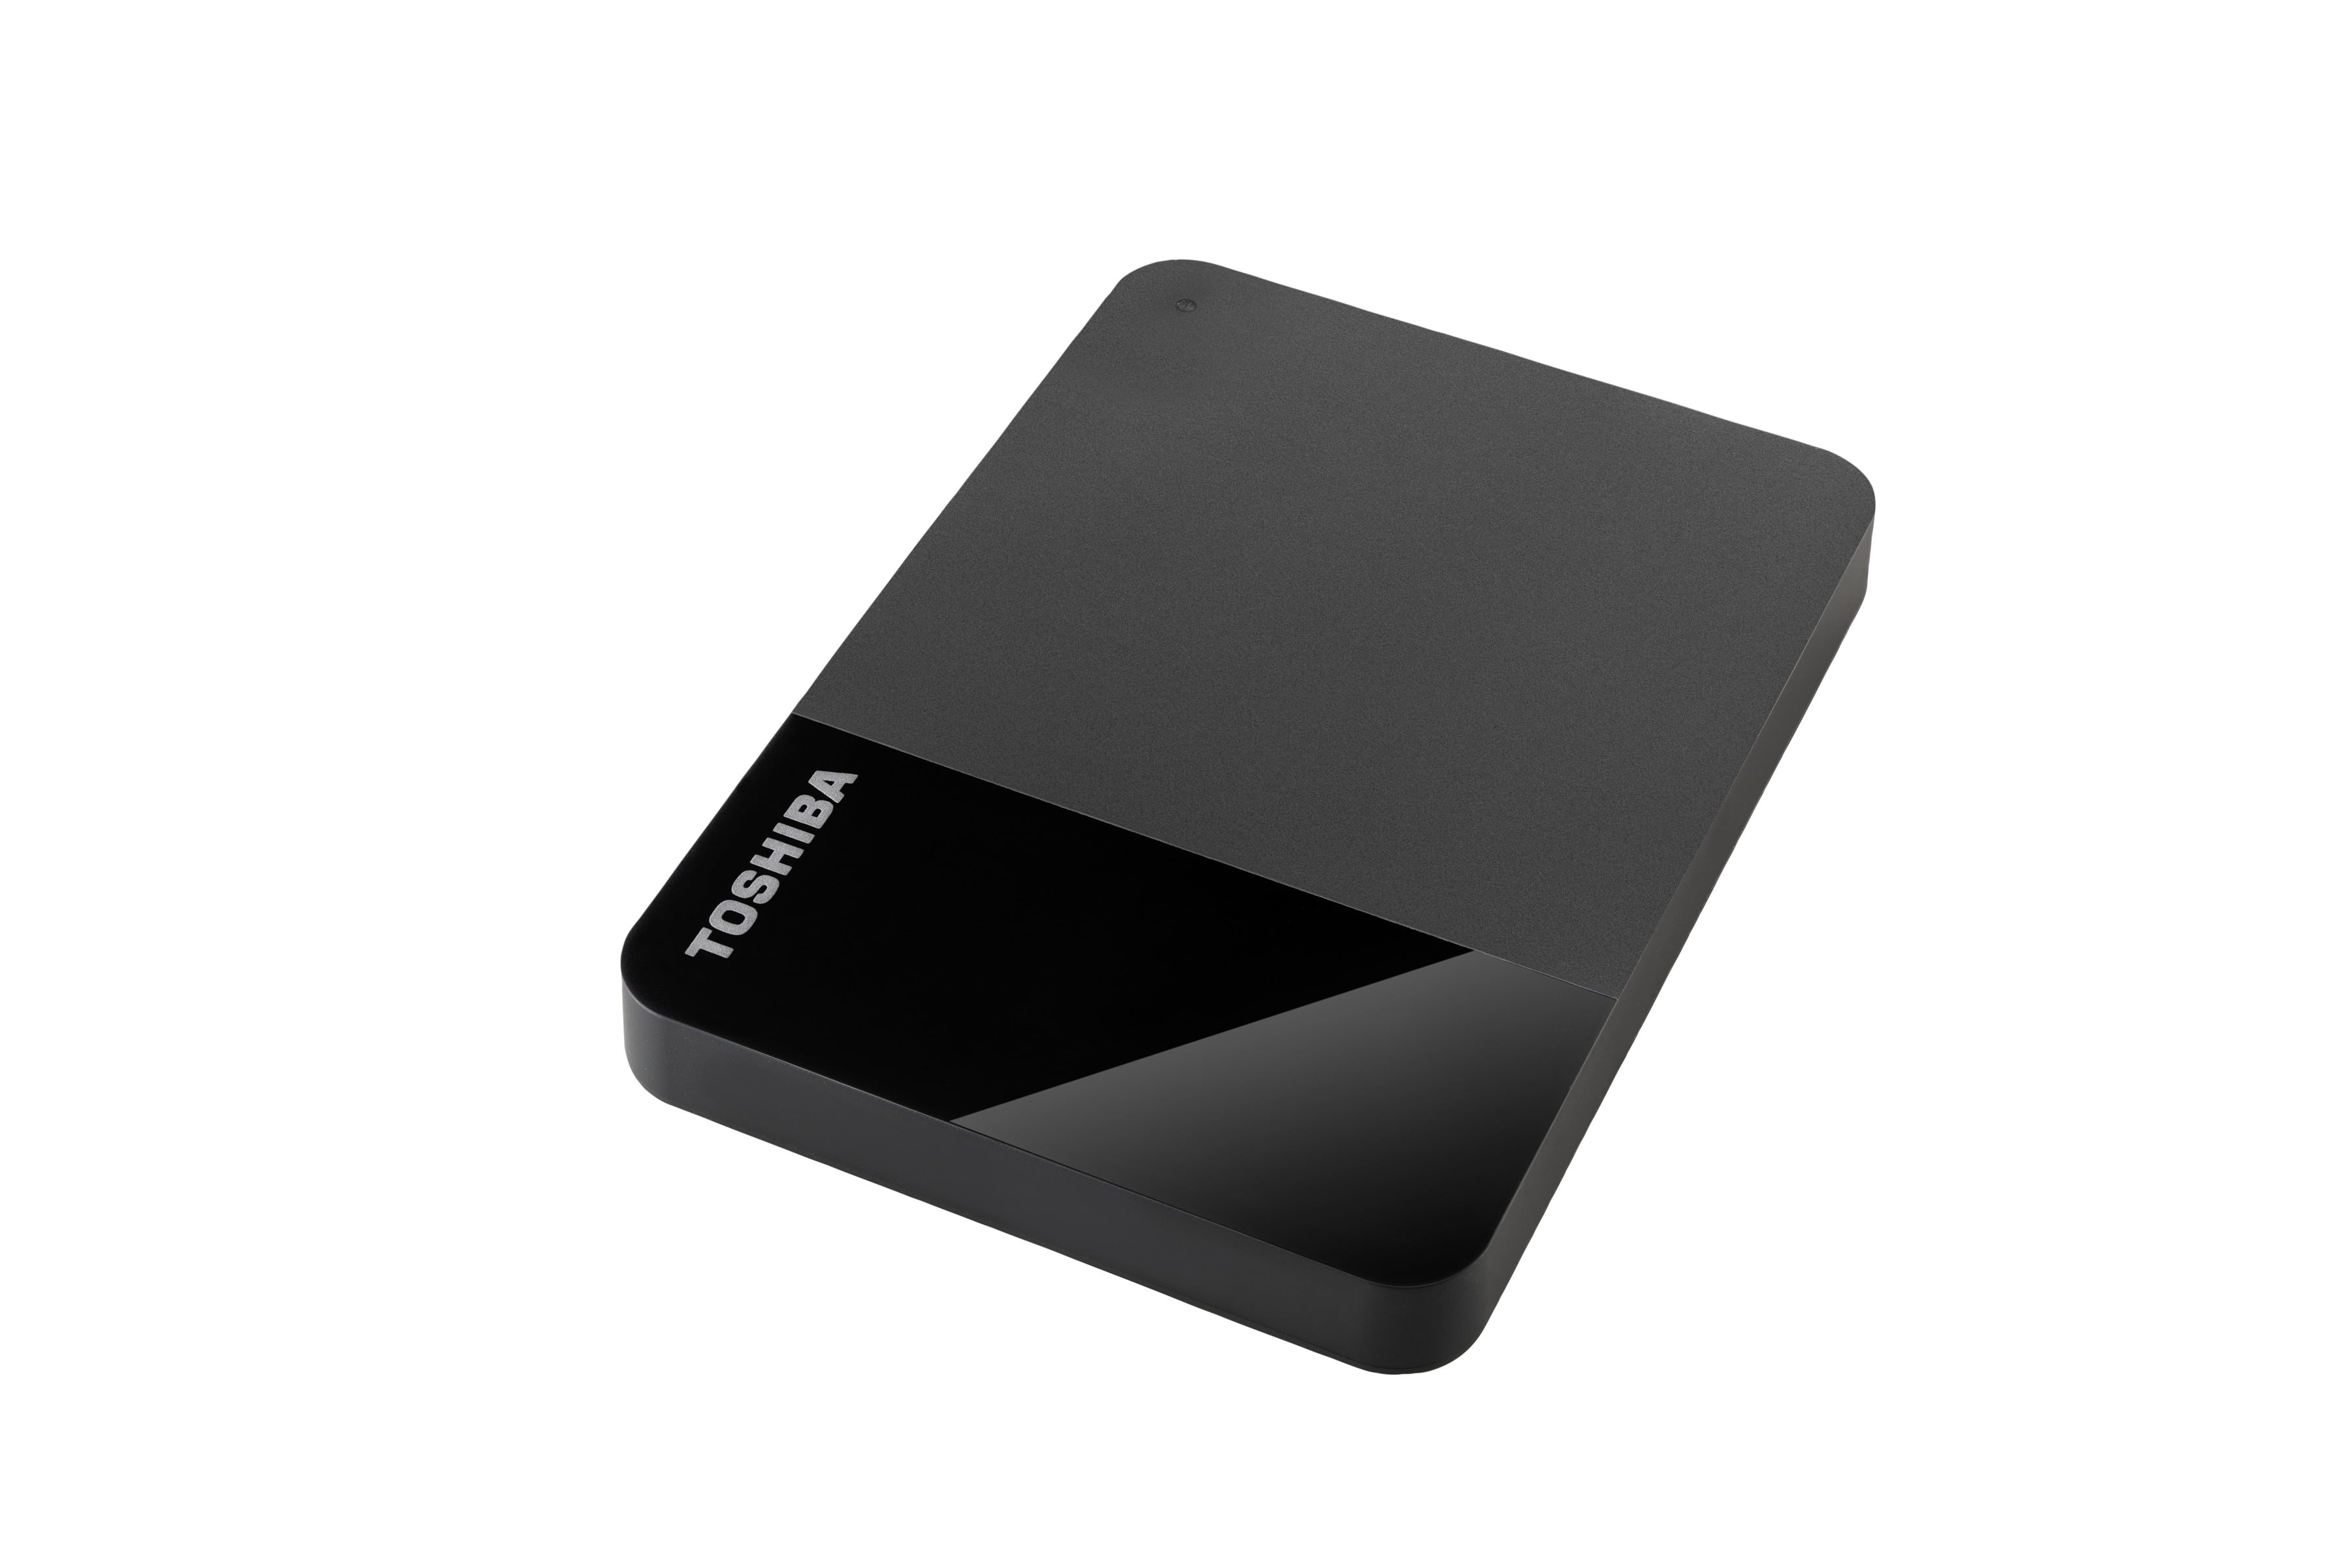 Toshiba Canvio Ready Portable External Hard Drive 1TB Black